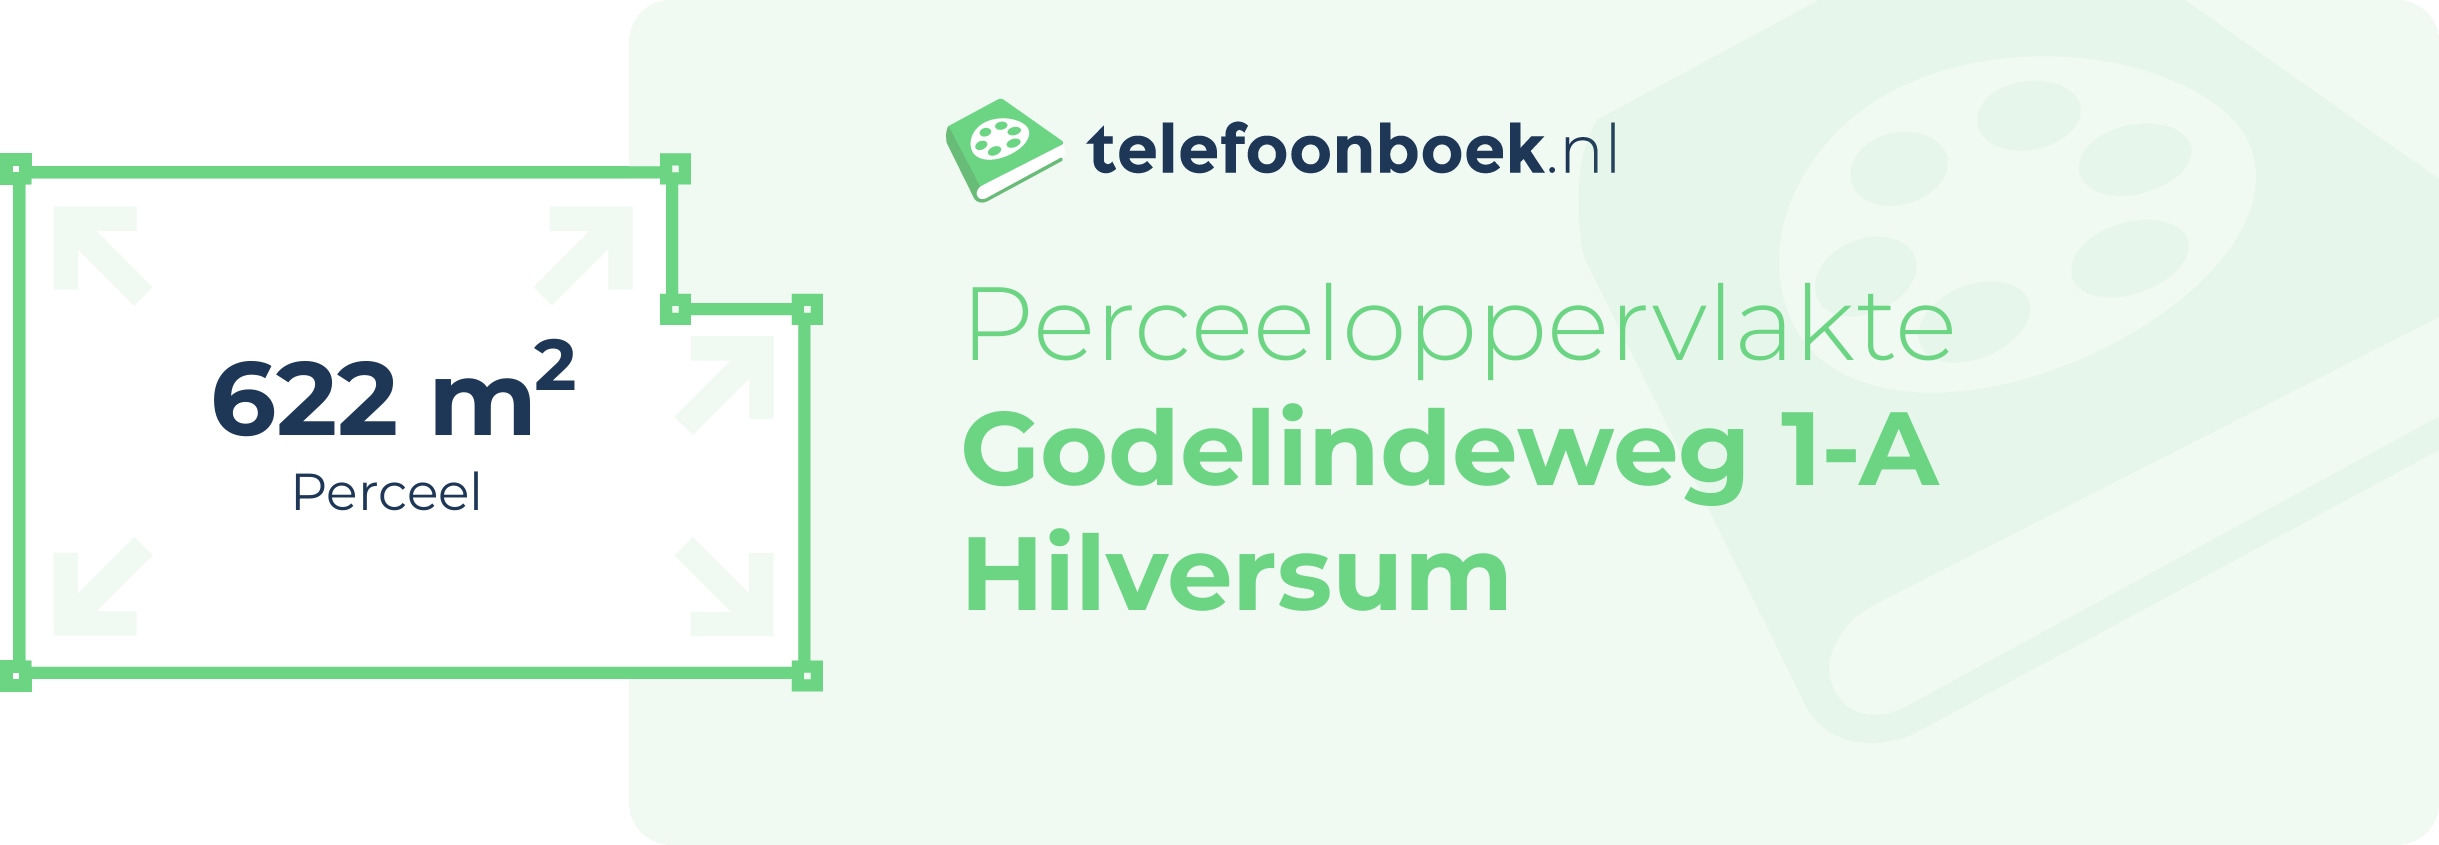 Perceeloppervlakte Godelindeweg 1-A Hilversum